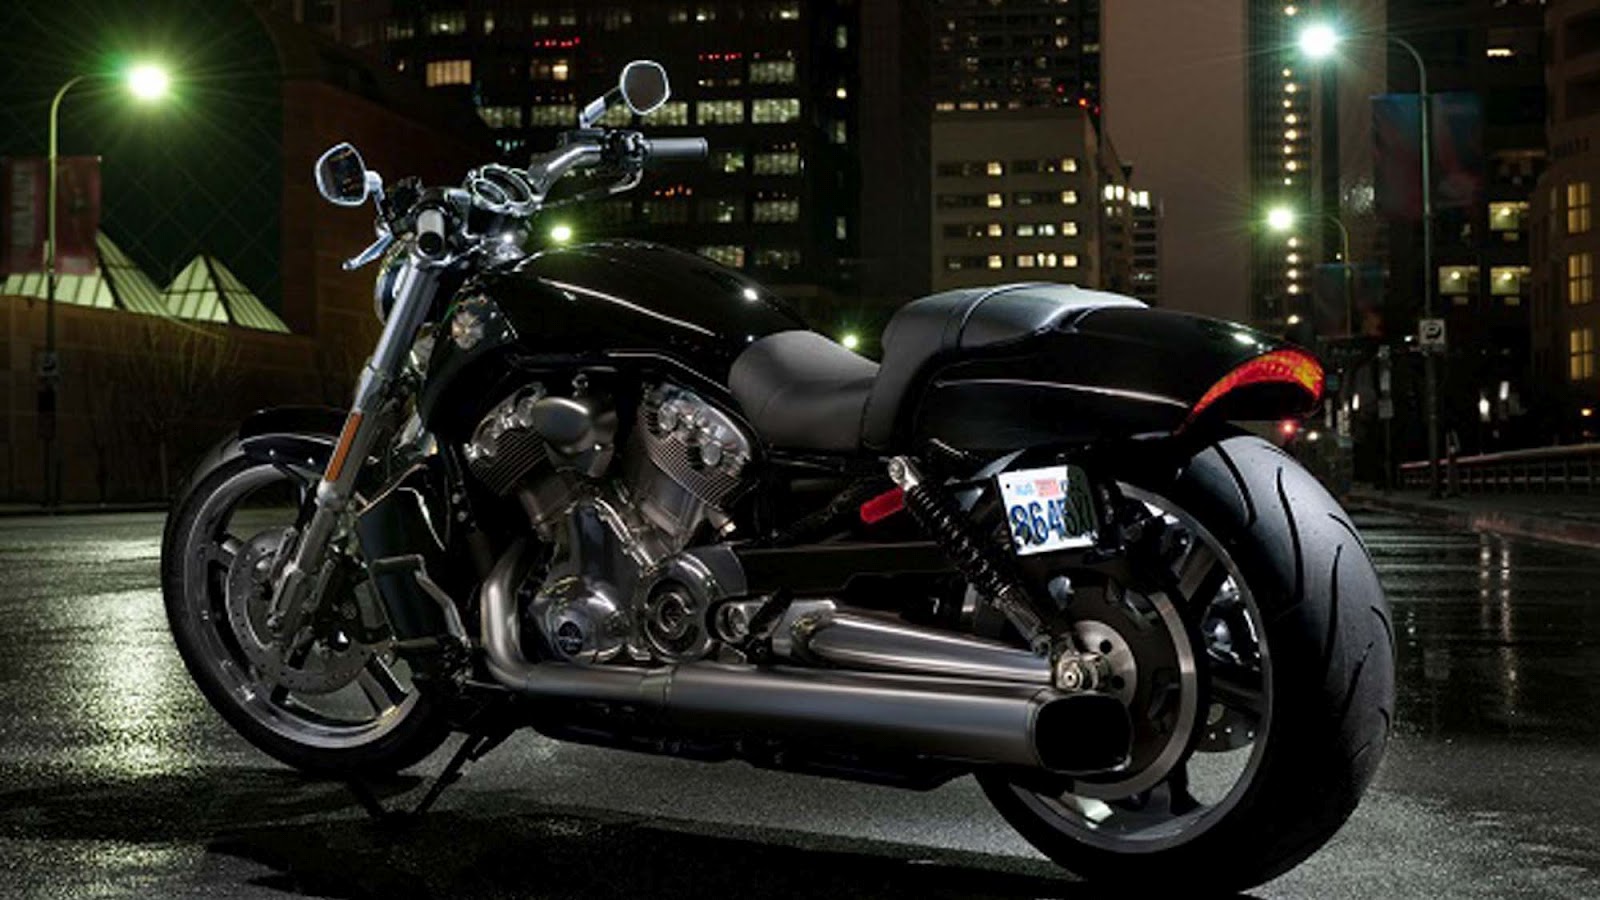 harley davidson motorcycles 2012 Posted by hot world at 00:39